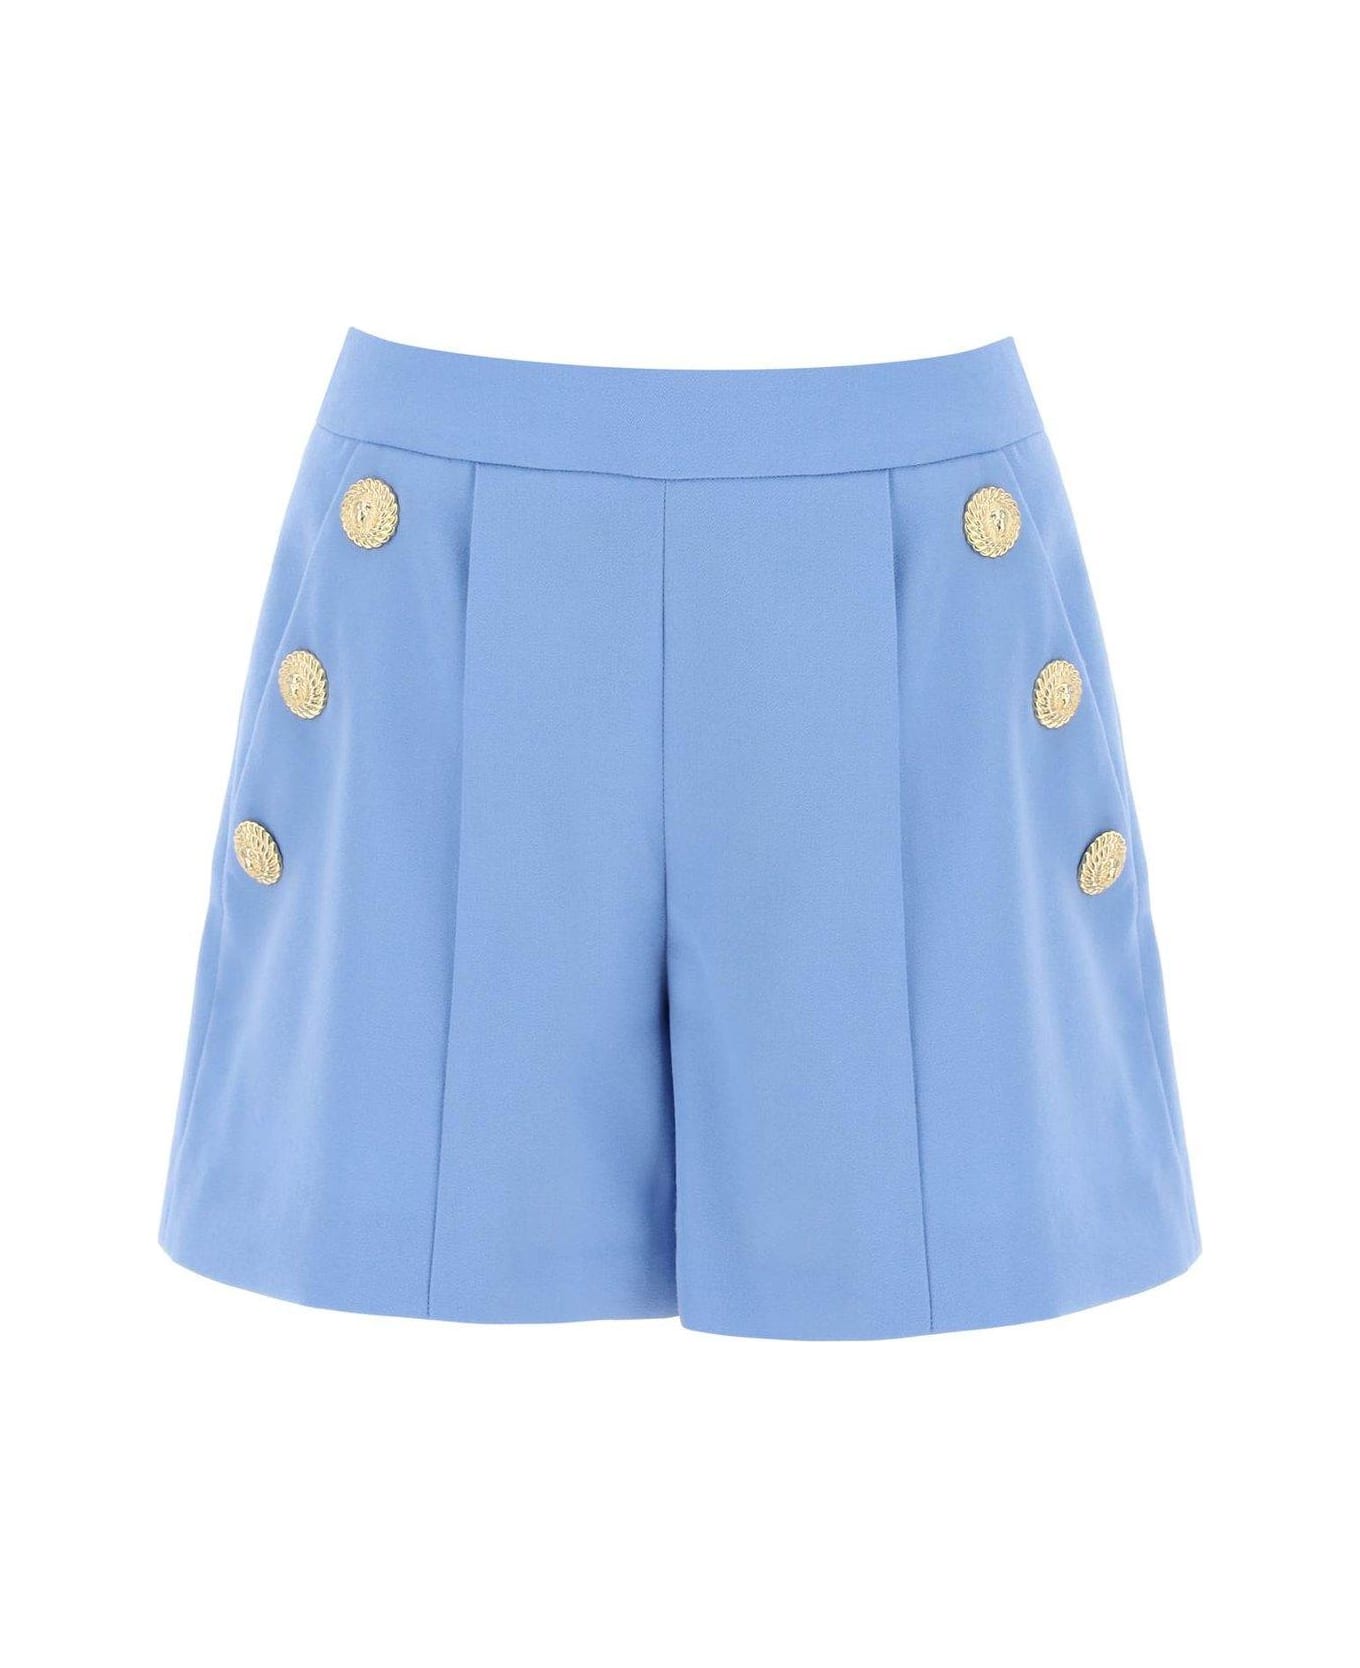 Balmain Button Embellished Pleated Shorts - BLEU CIEL (Light blue)